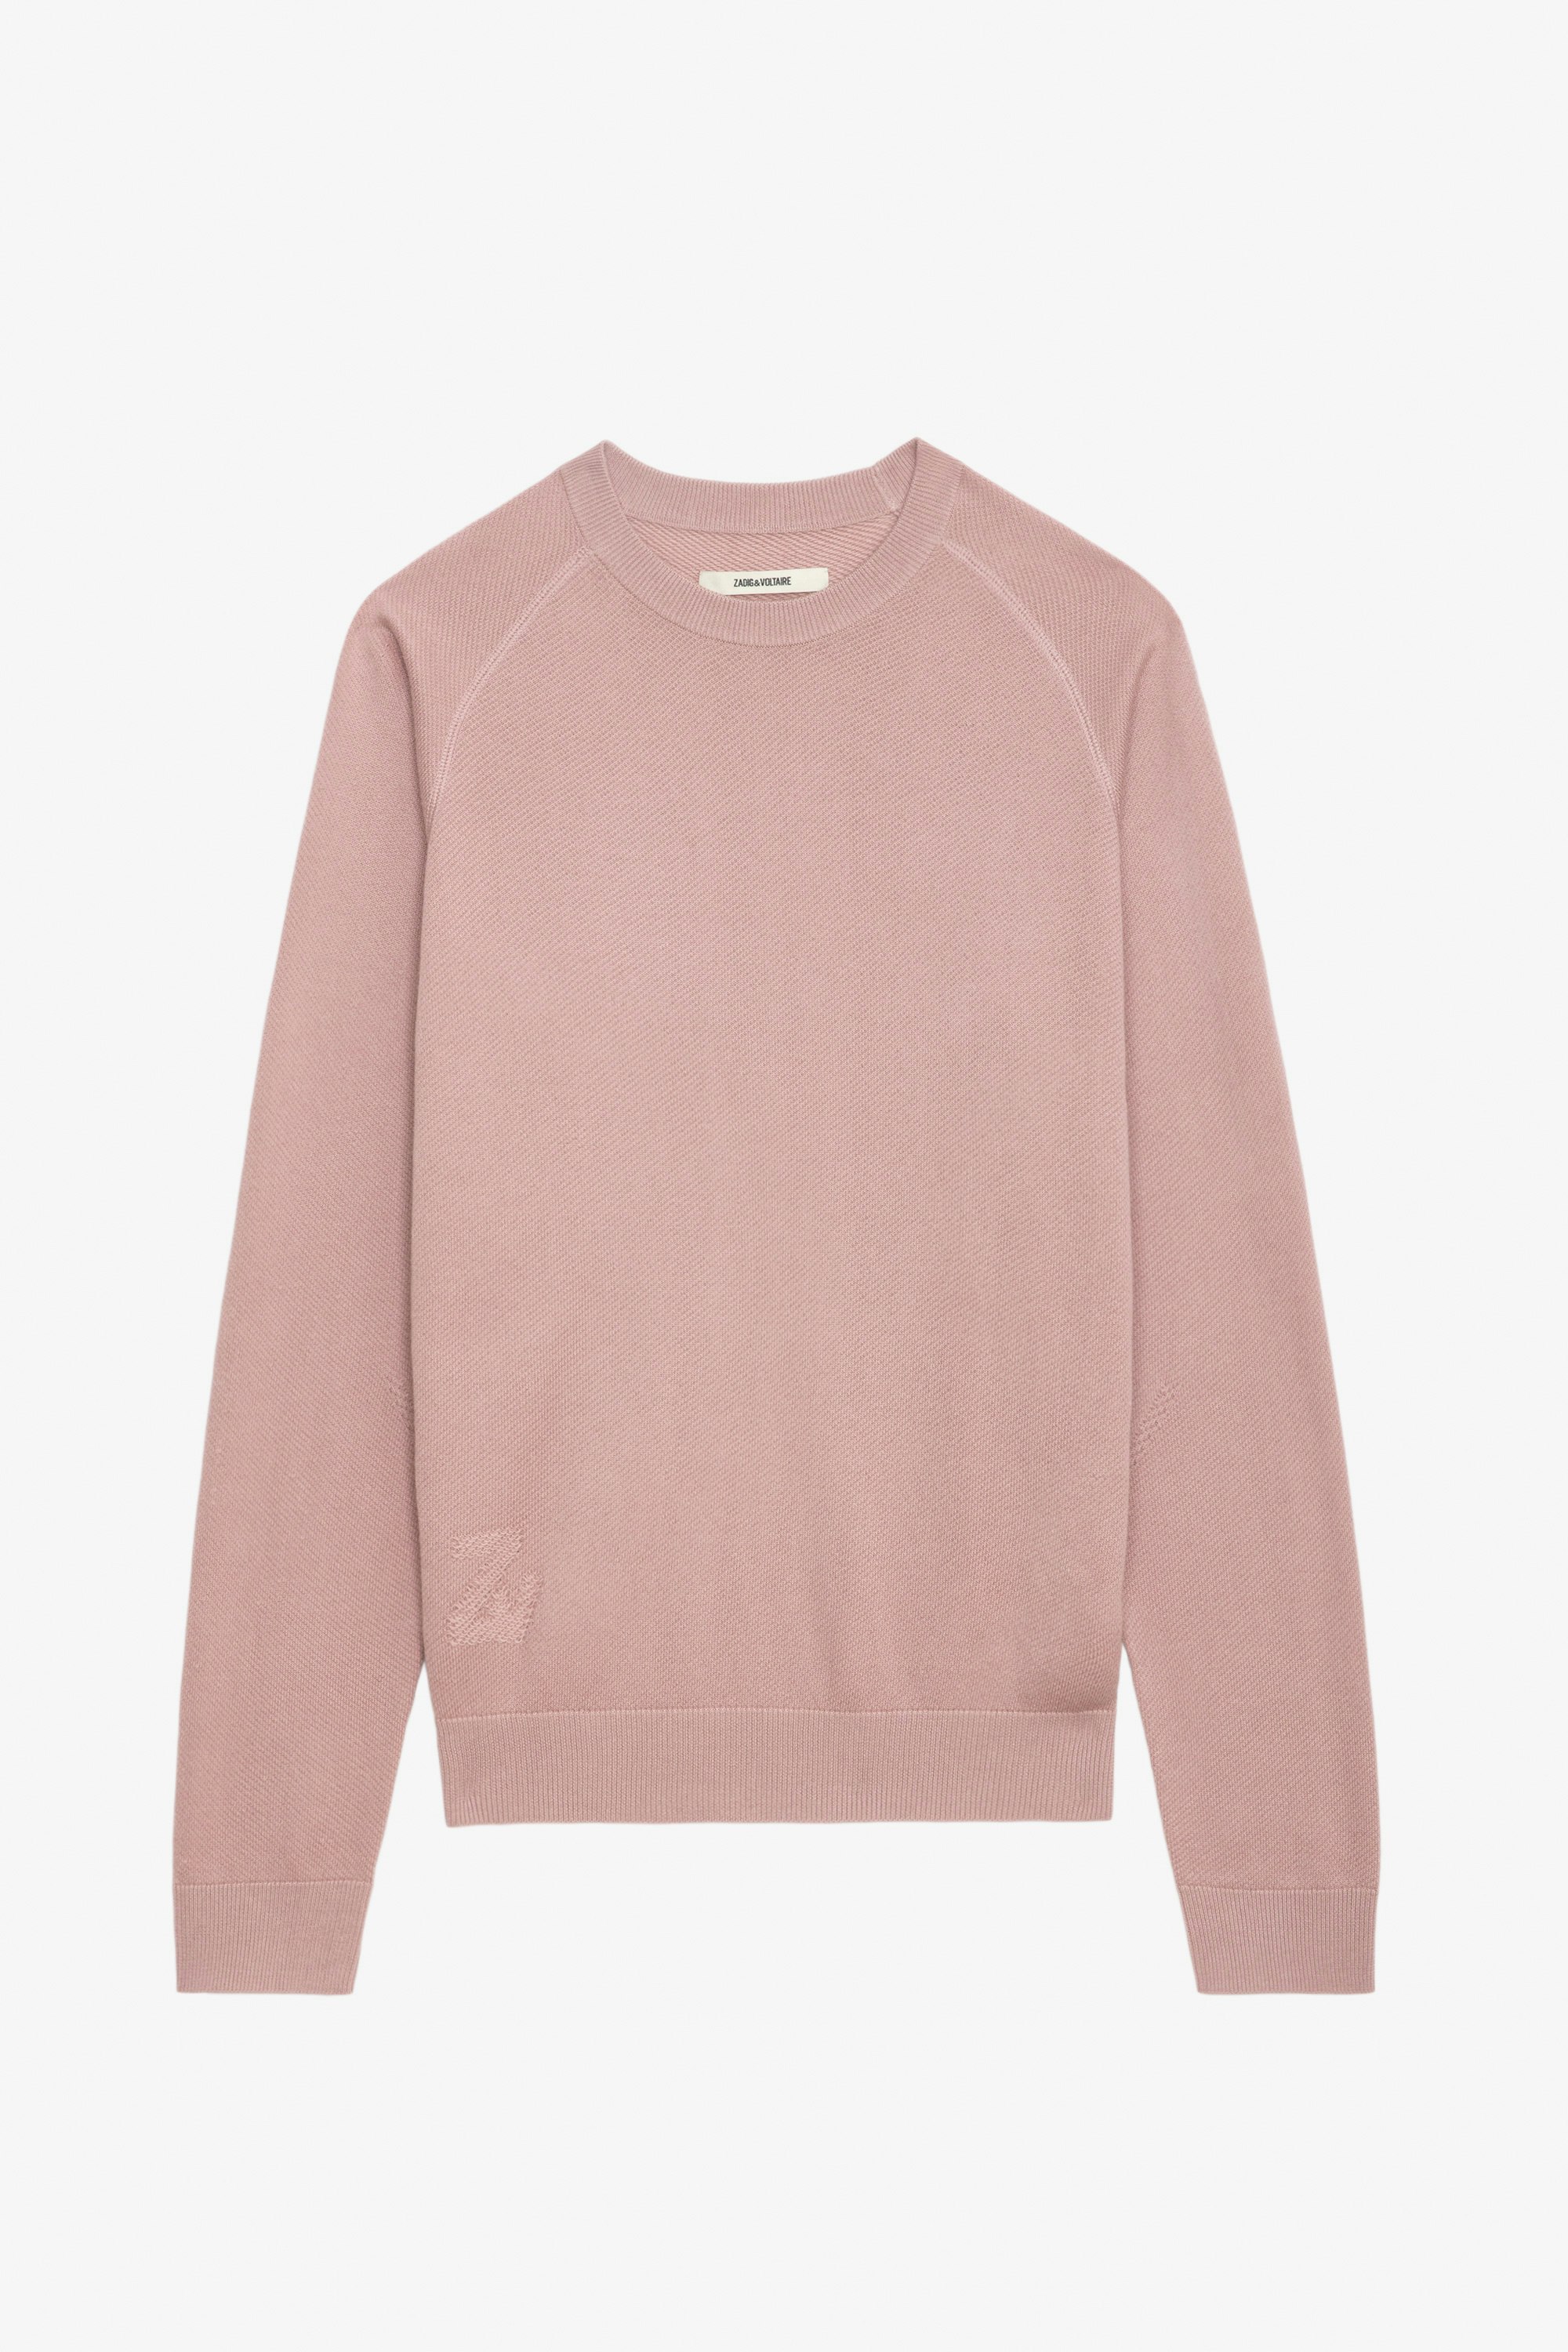 Thomaso Jumper - Pink long-sleeved sweatshirt with signature.